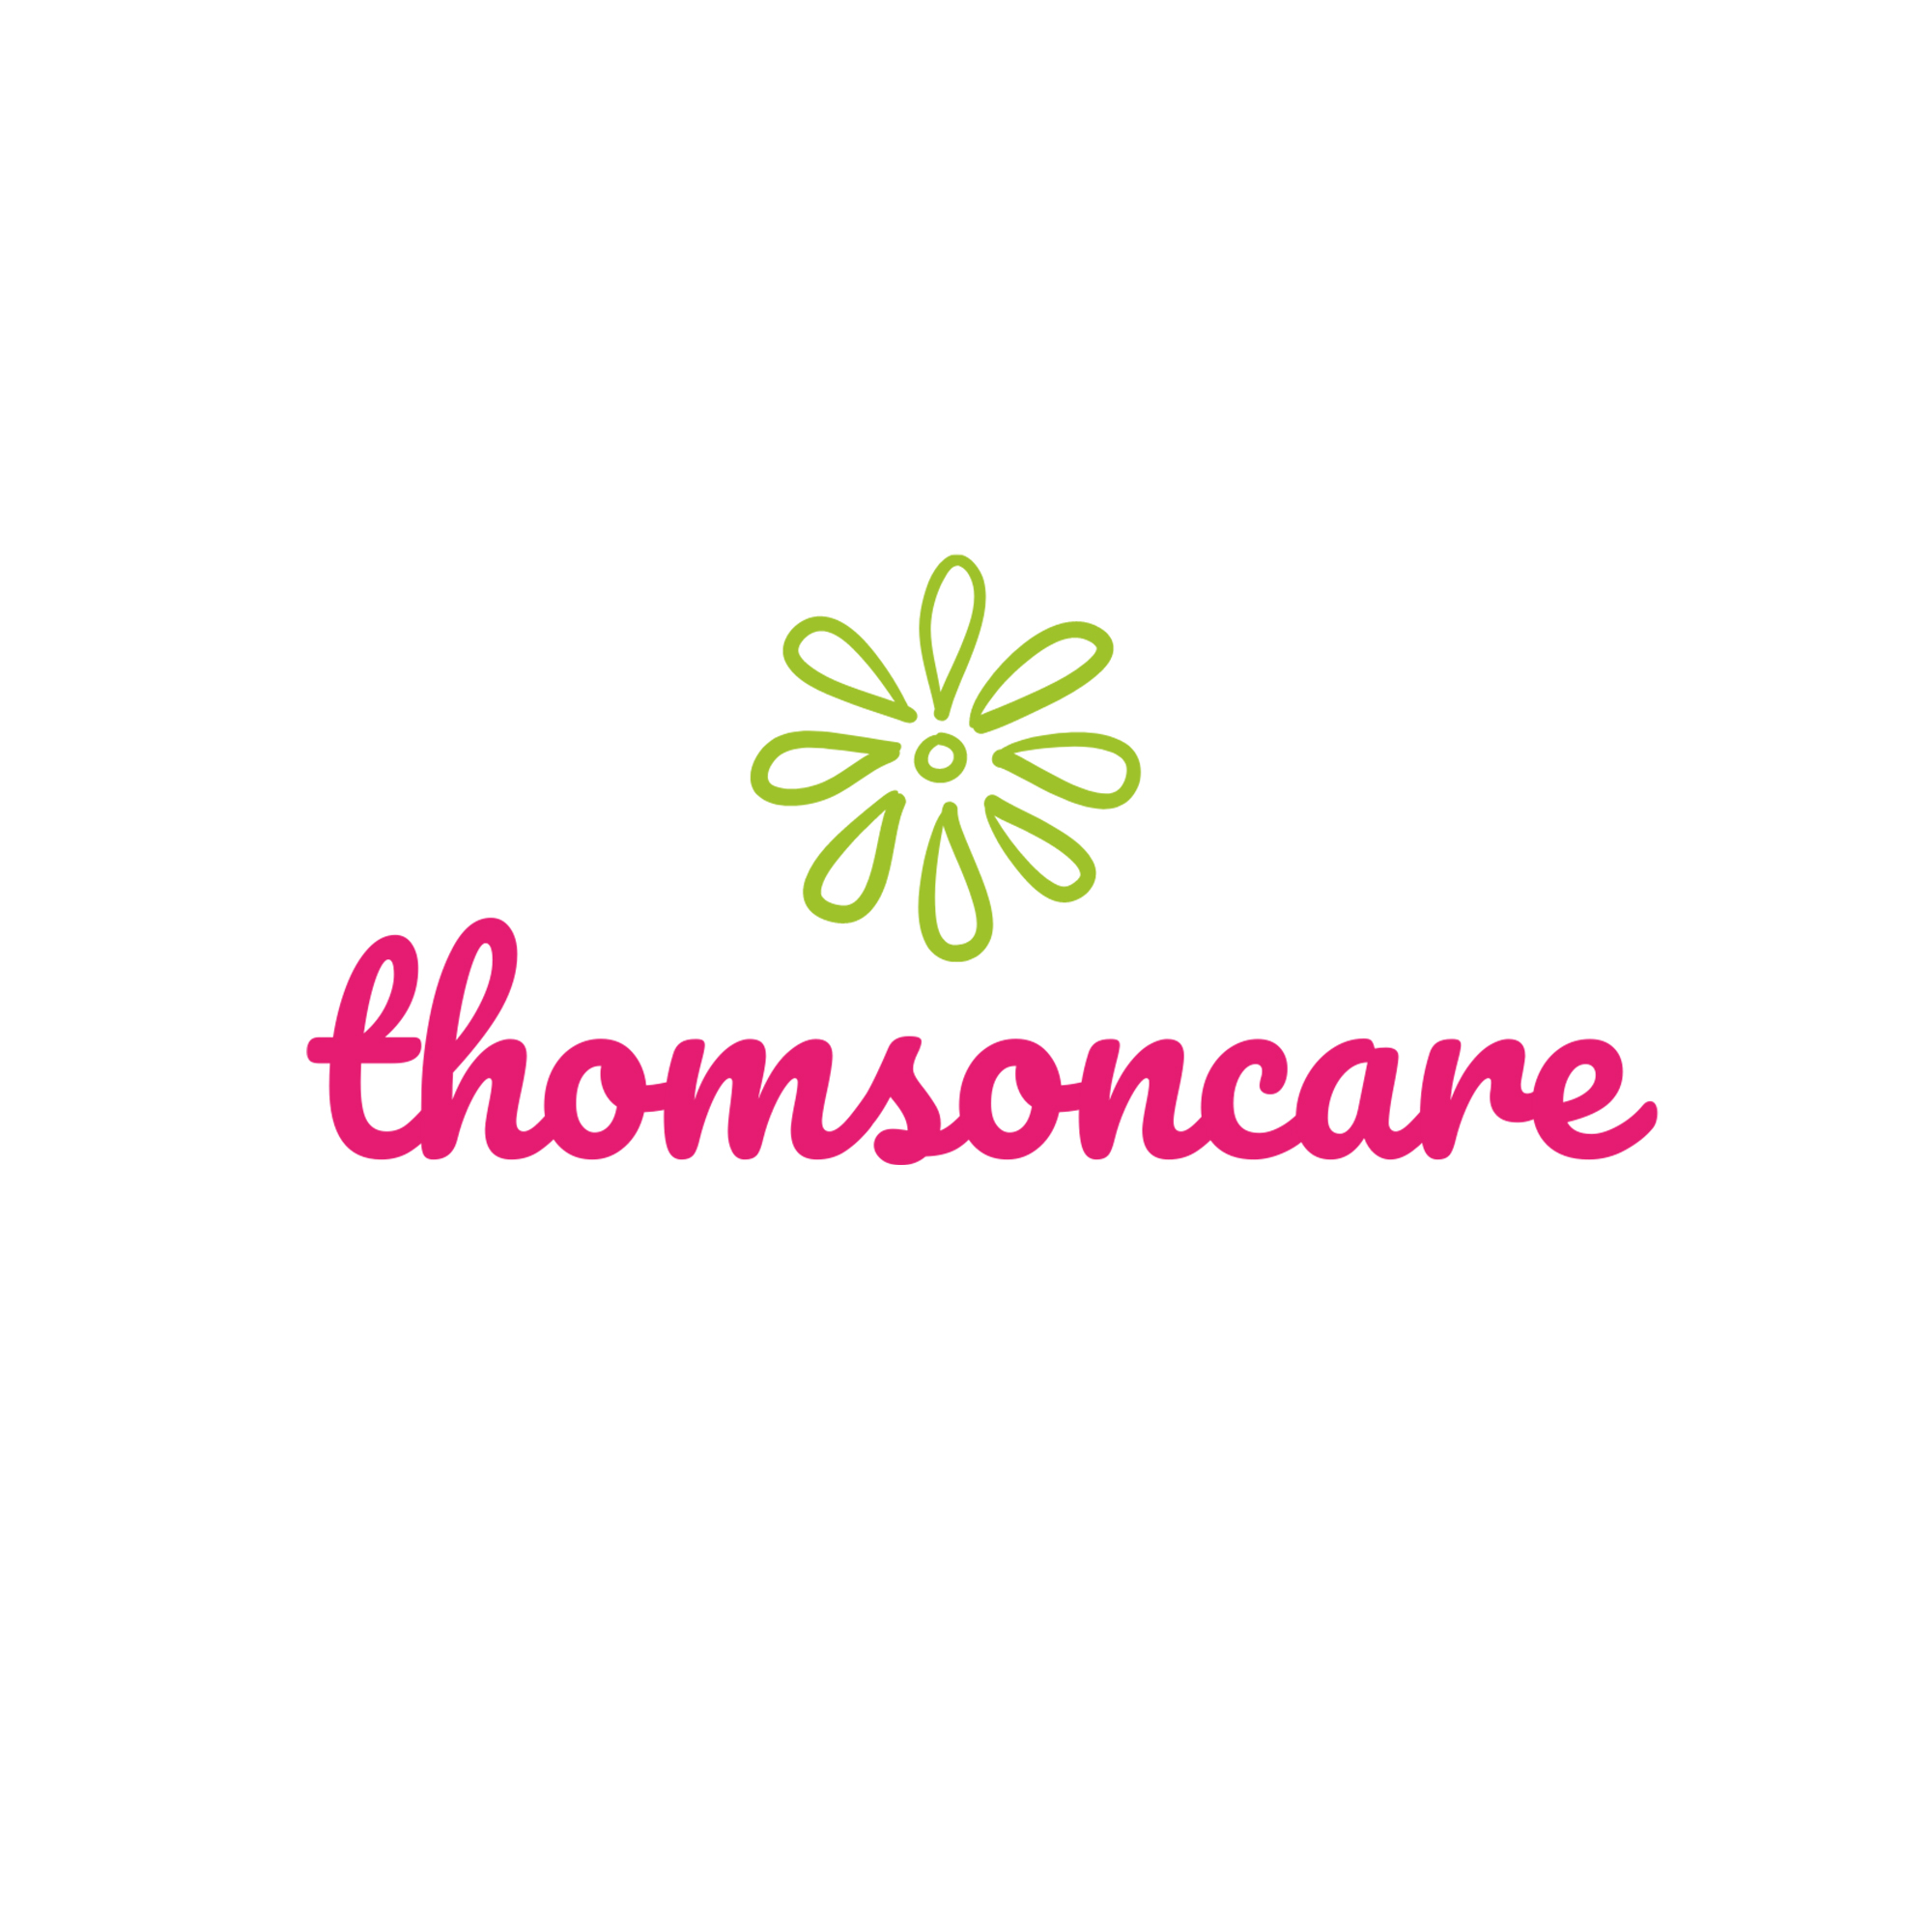 Nhà thuốc Thomsoncare